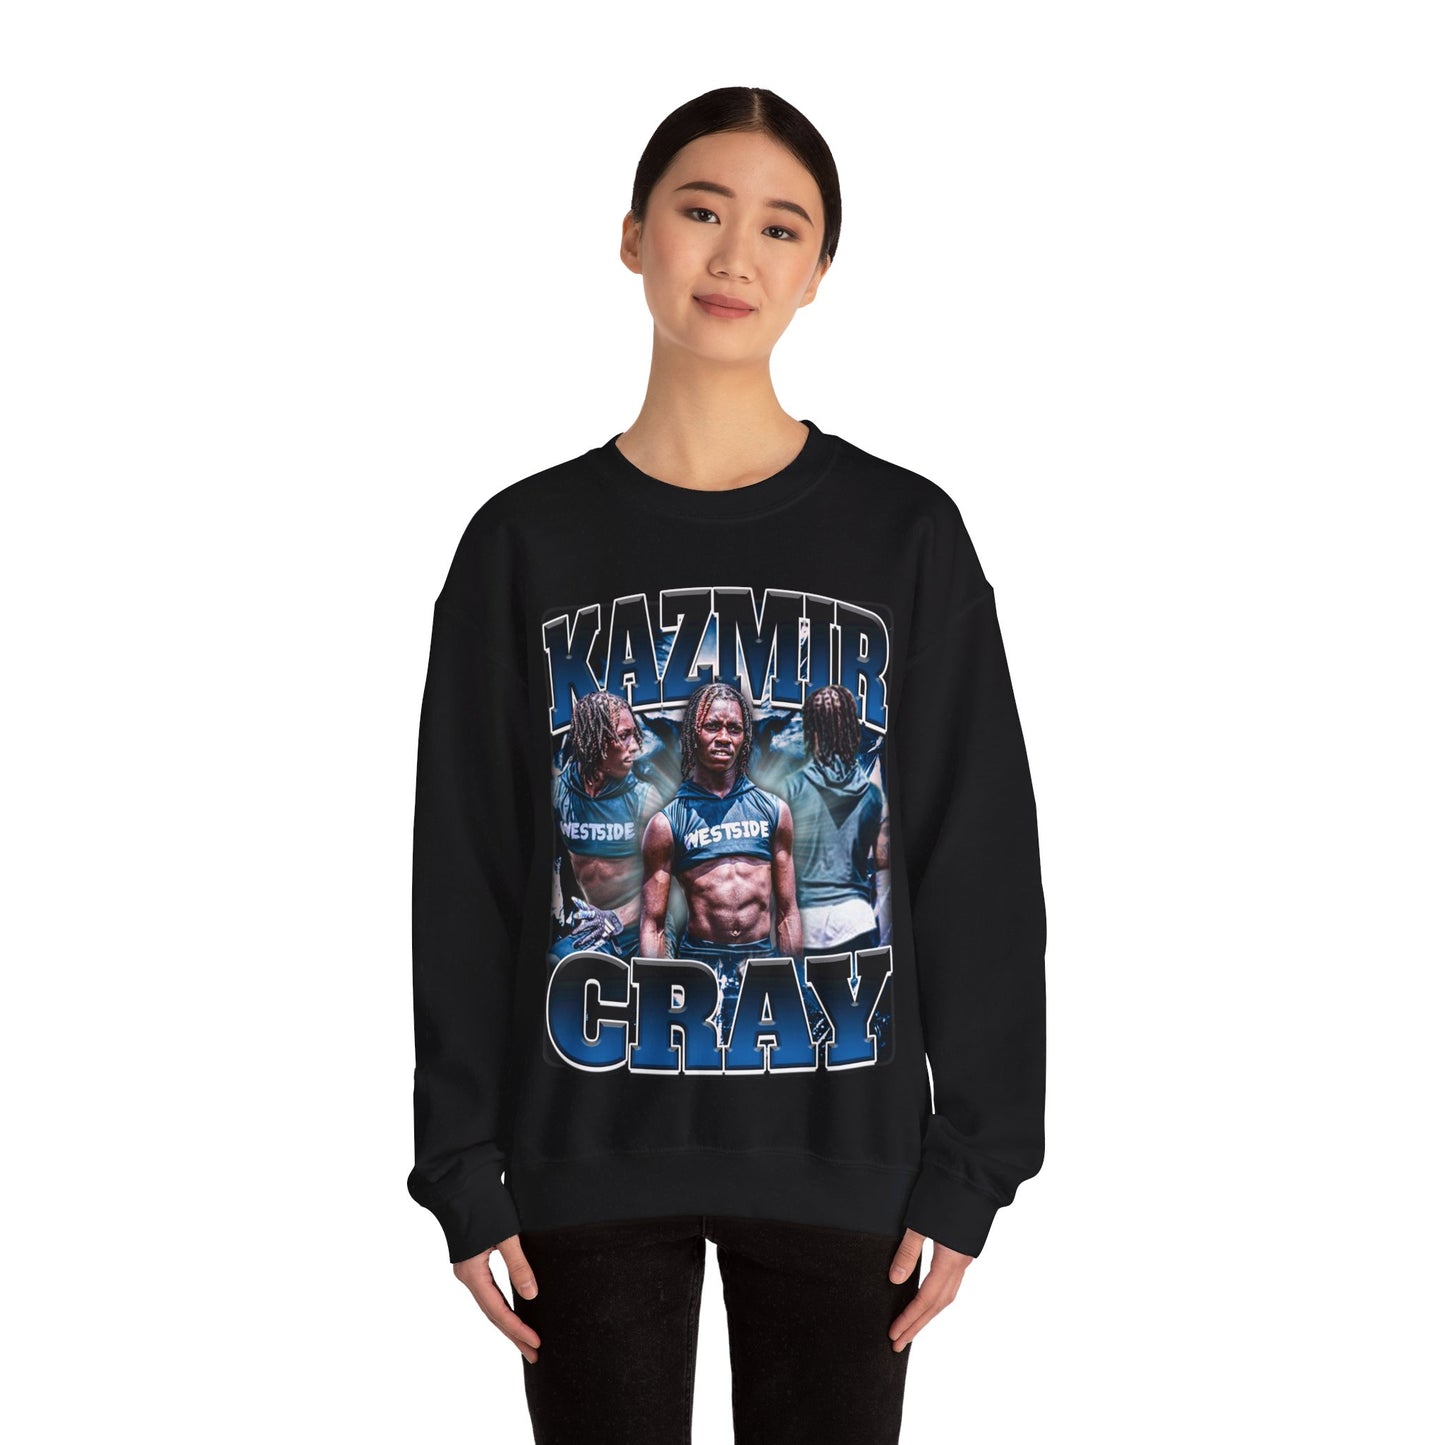 Kazmir Cray Crewneck Sweatshirt